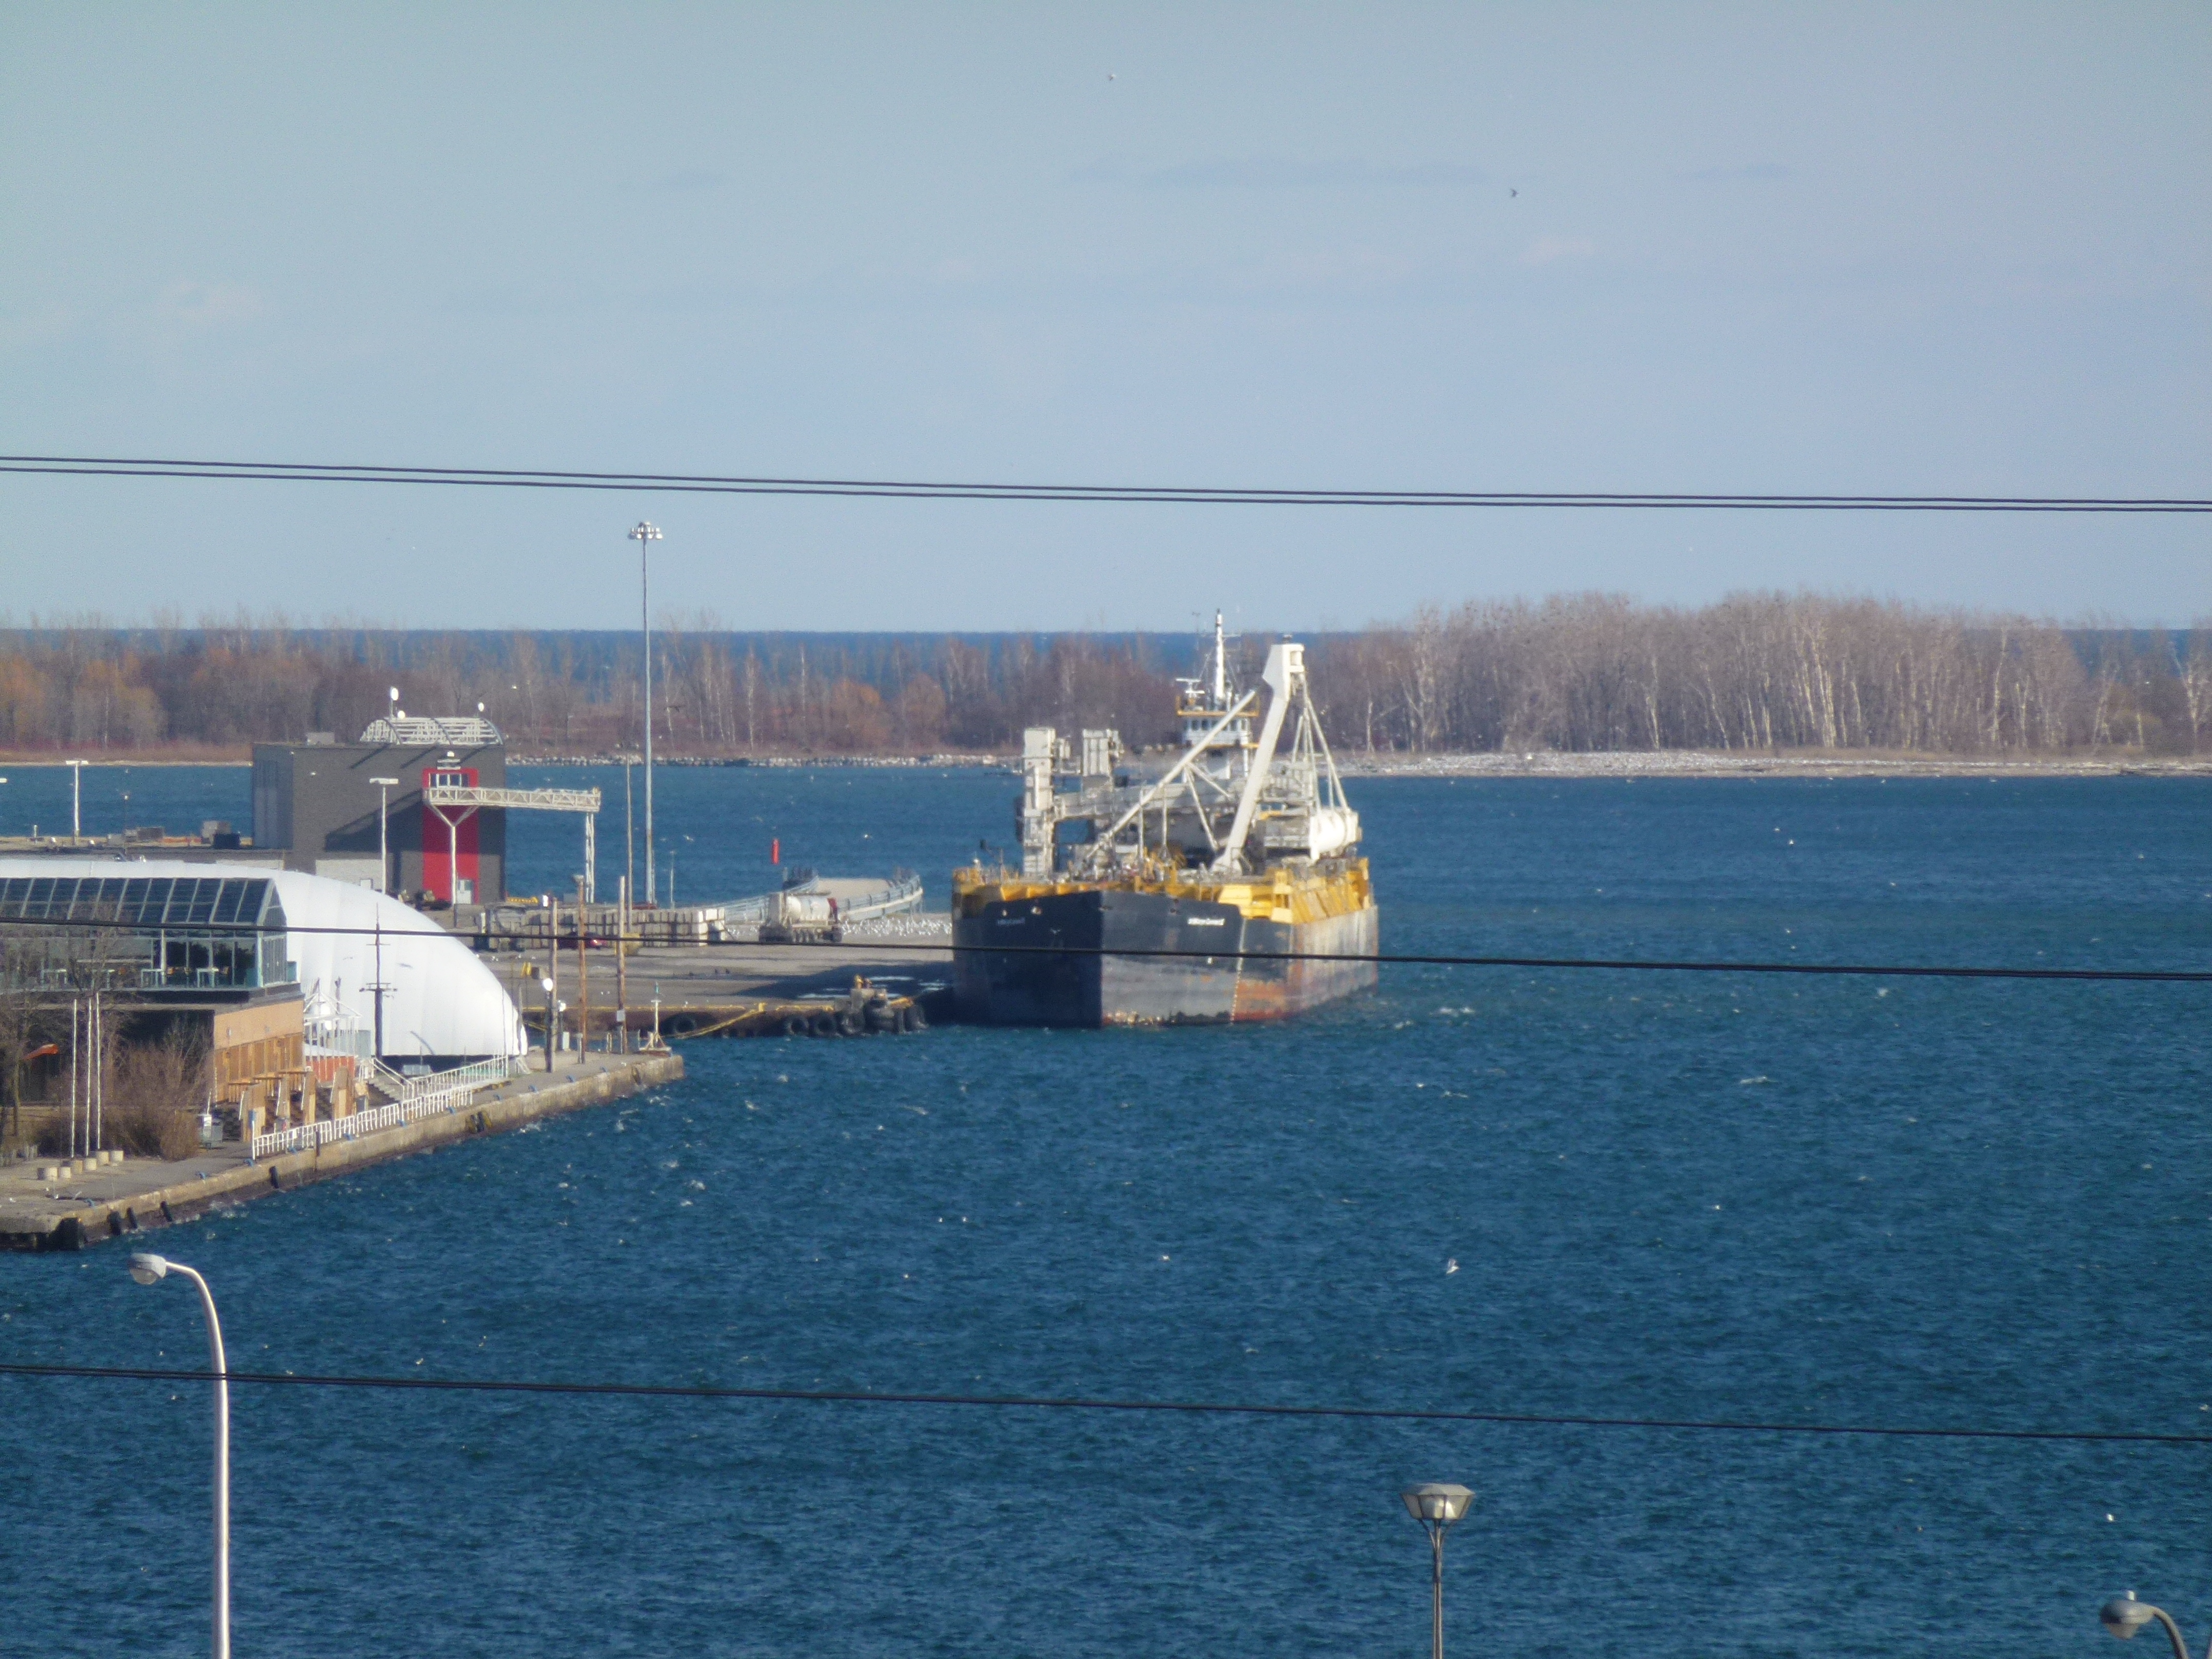 Lake freighter moored in the eastern gap, 2013 04 03 -f.jpg photo